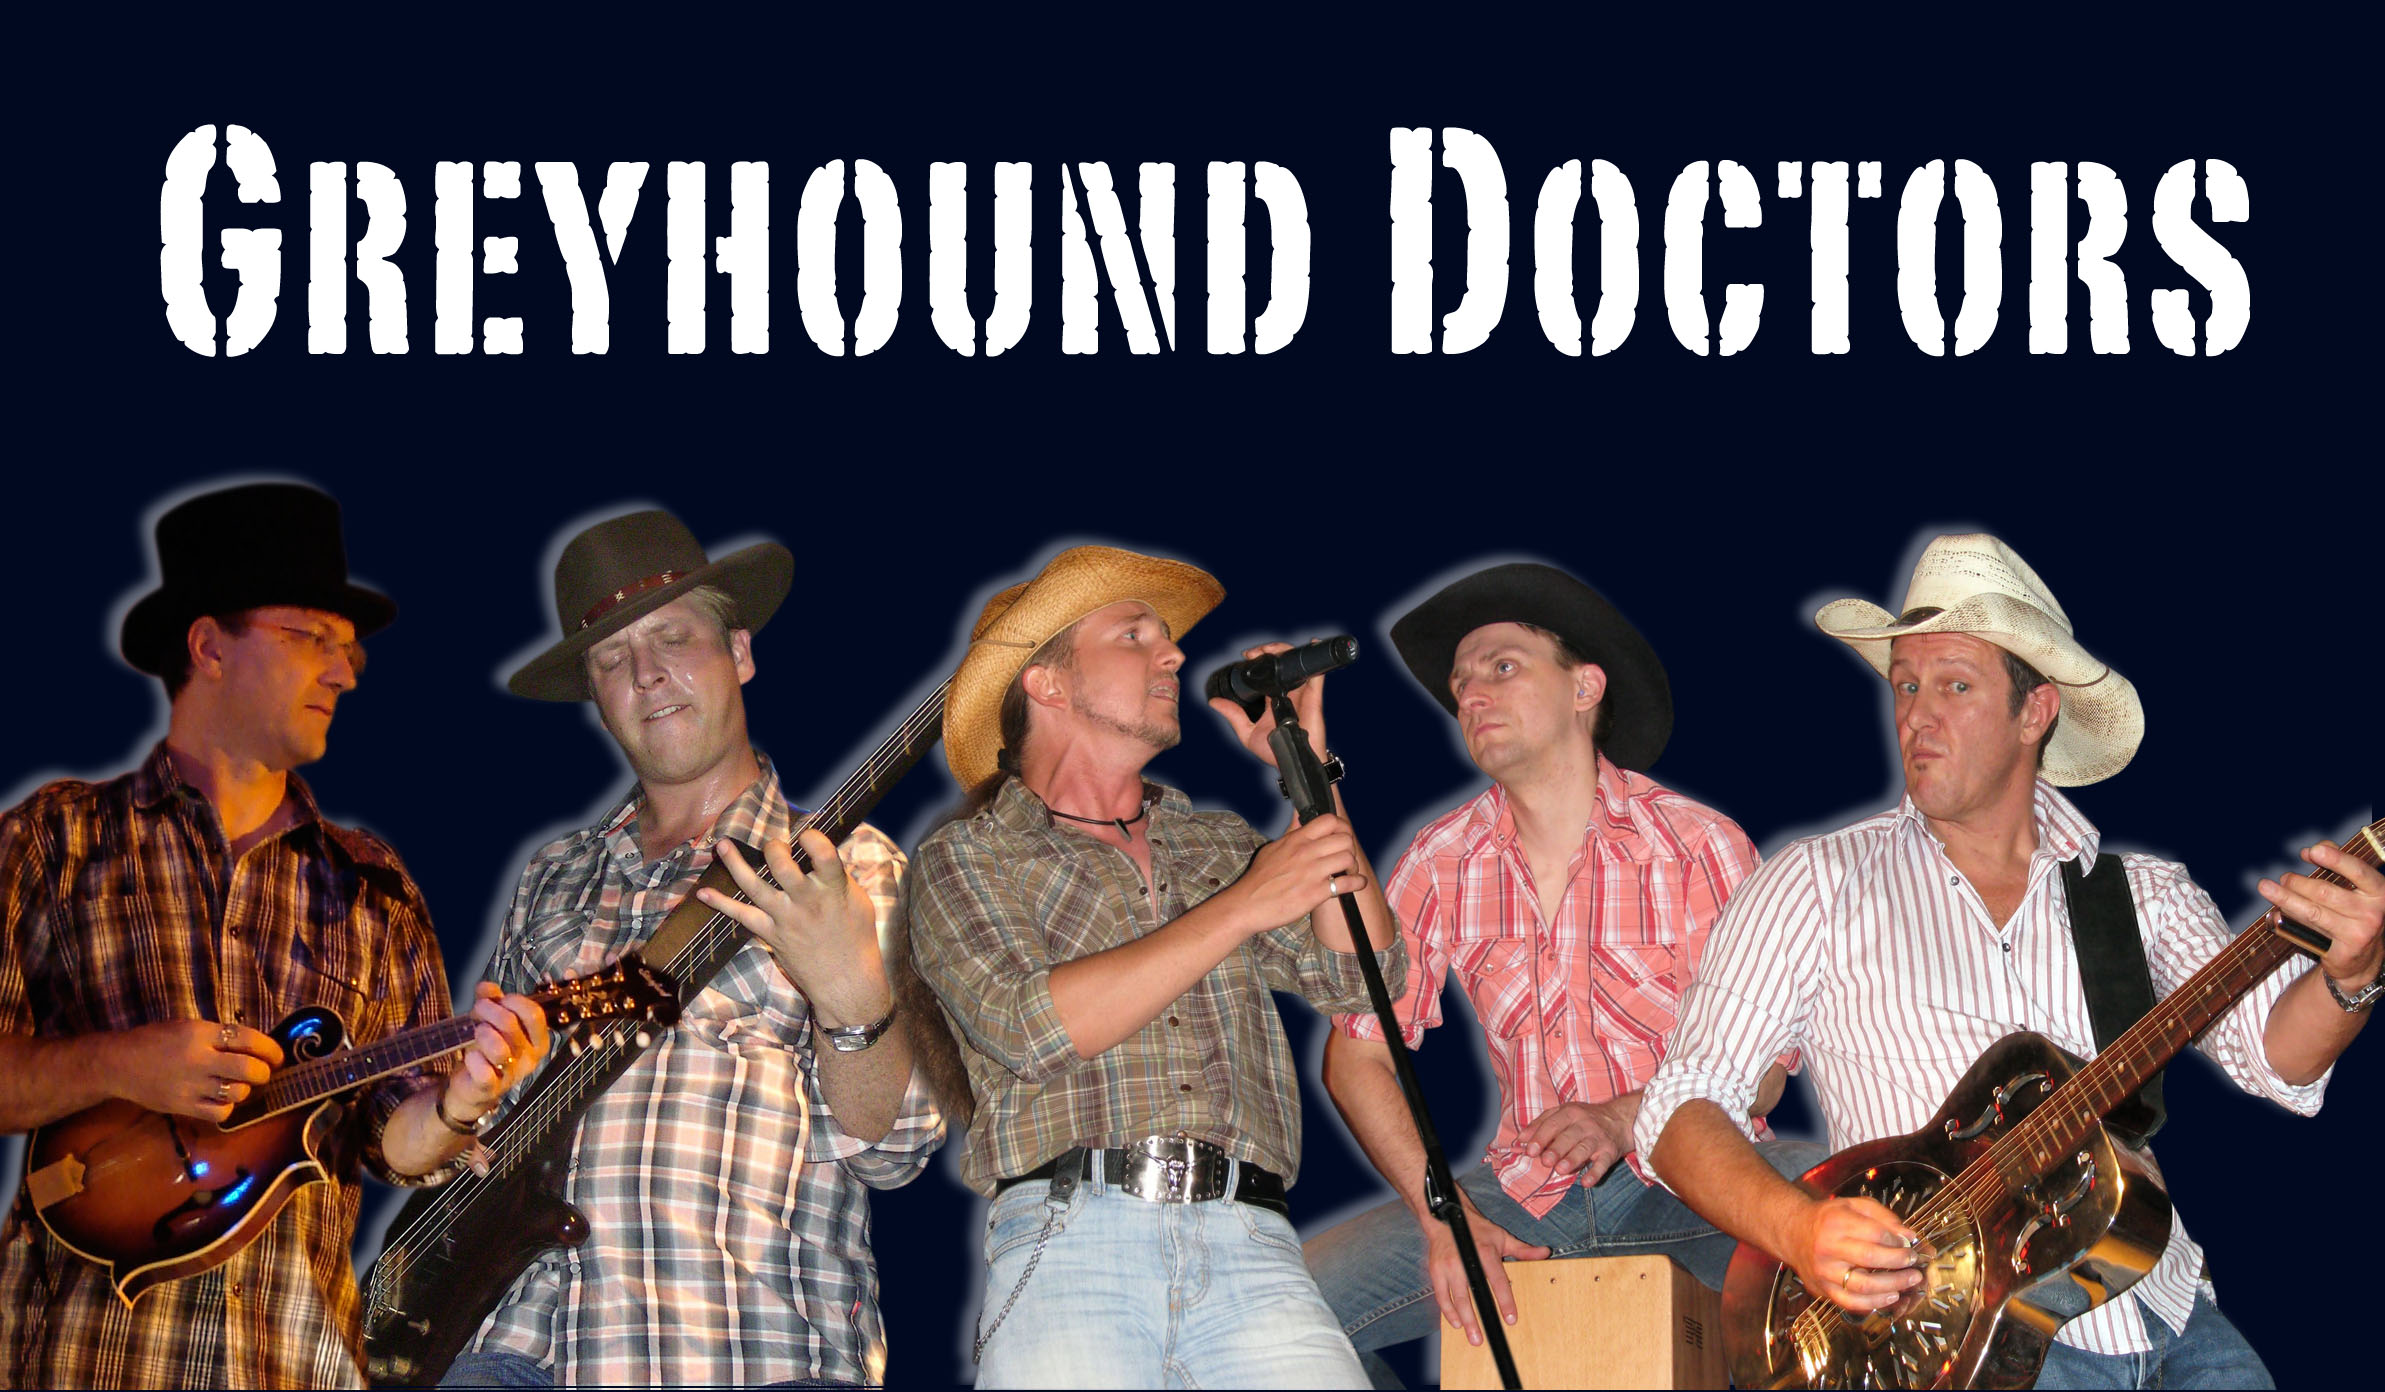 Greyhound-Doctors